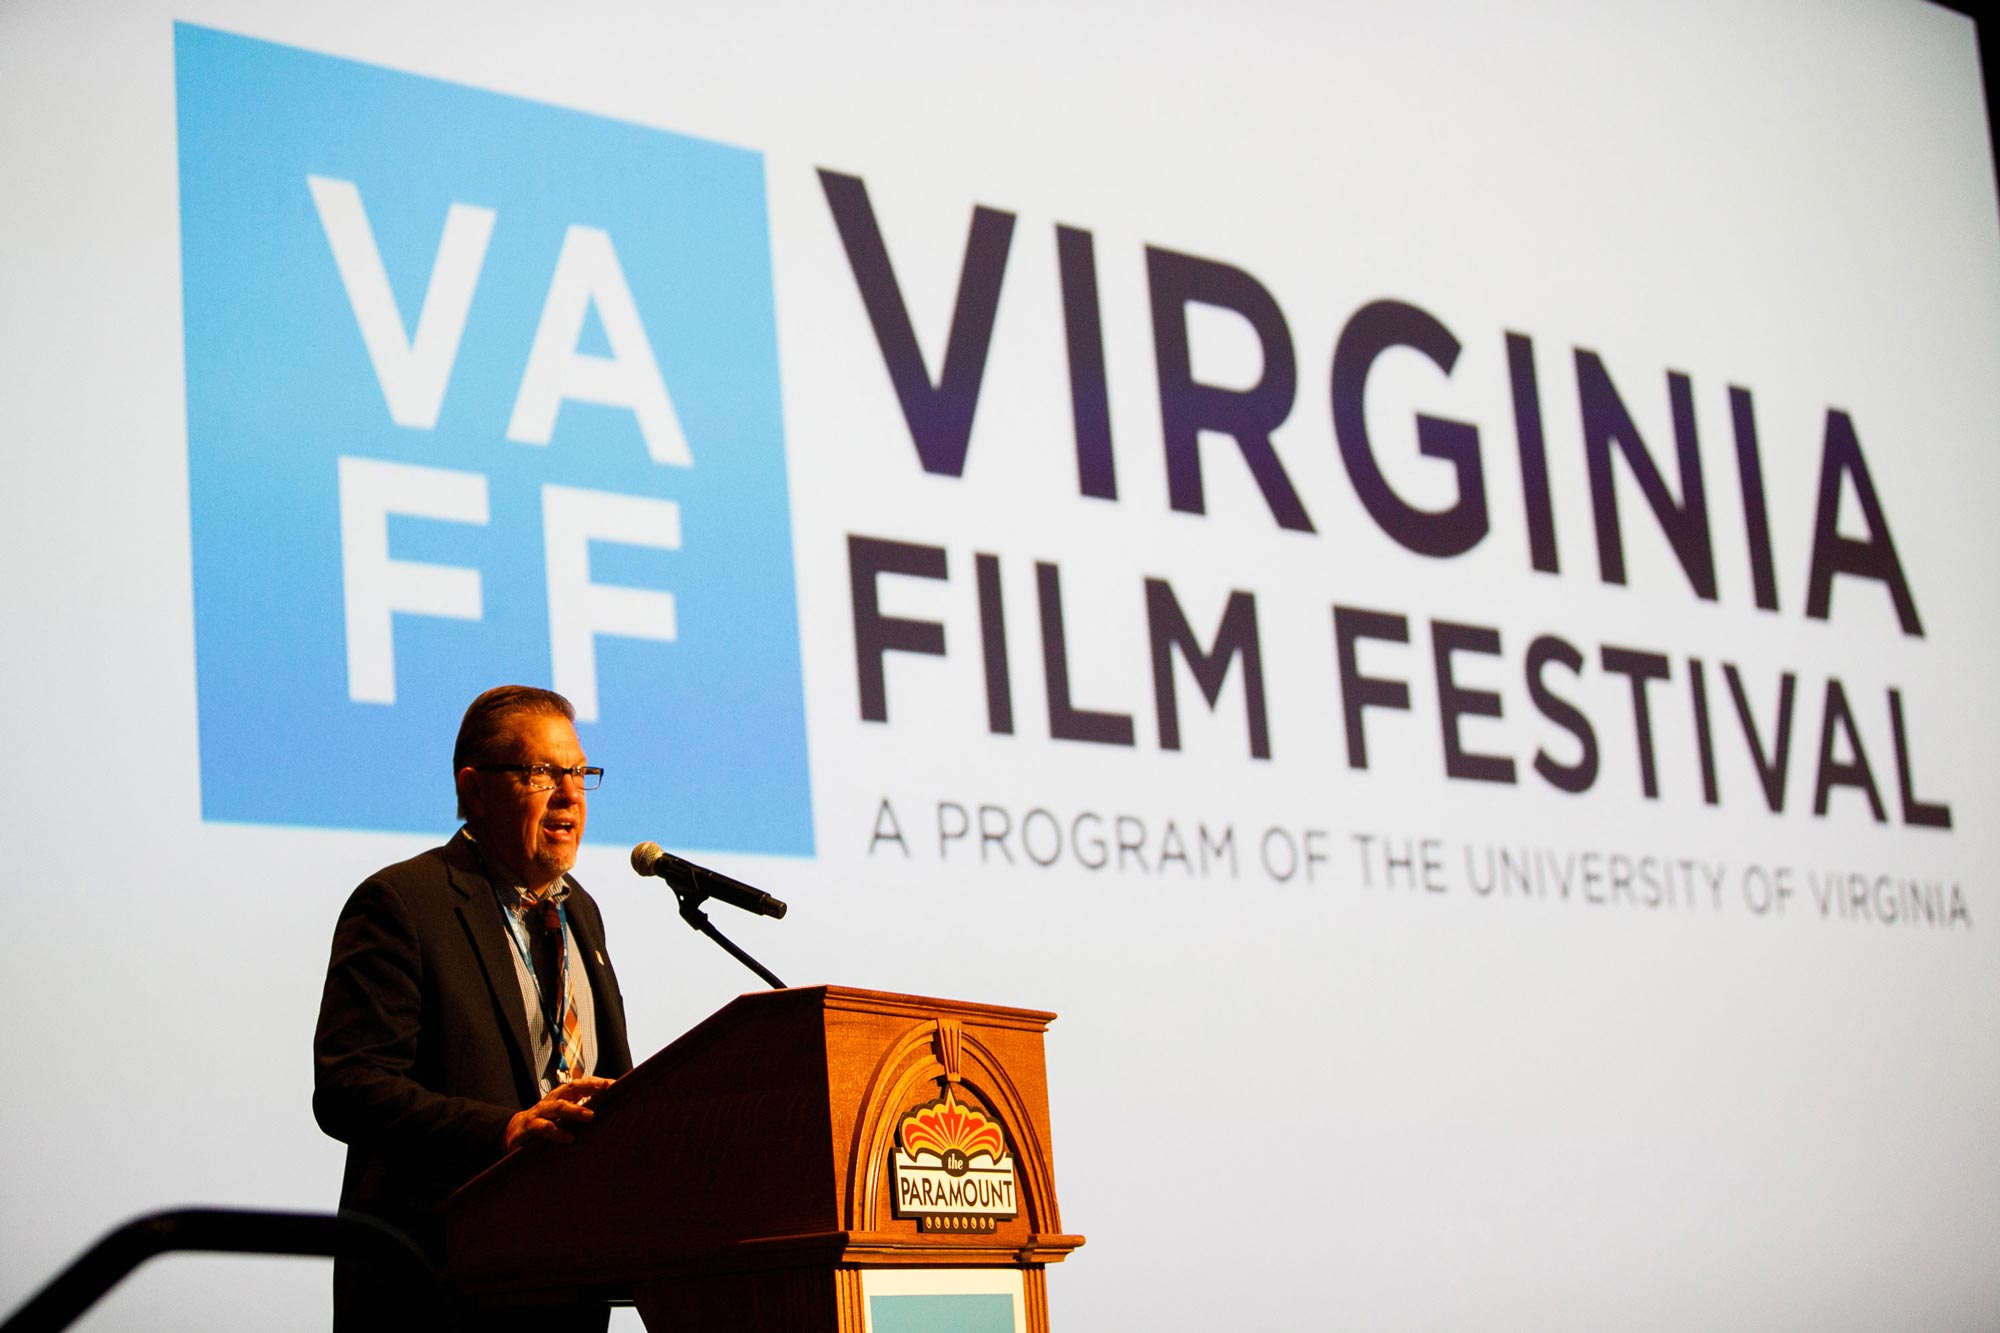 Virginia Film Festival Receives 20,000 Grant From National Endowment